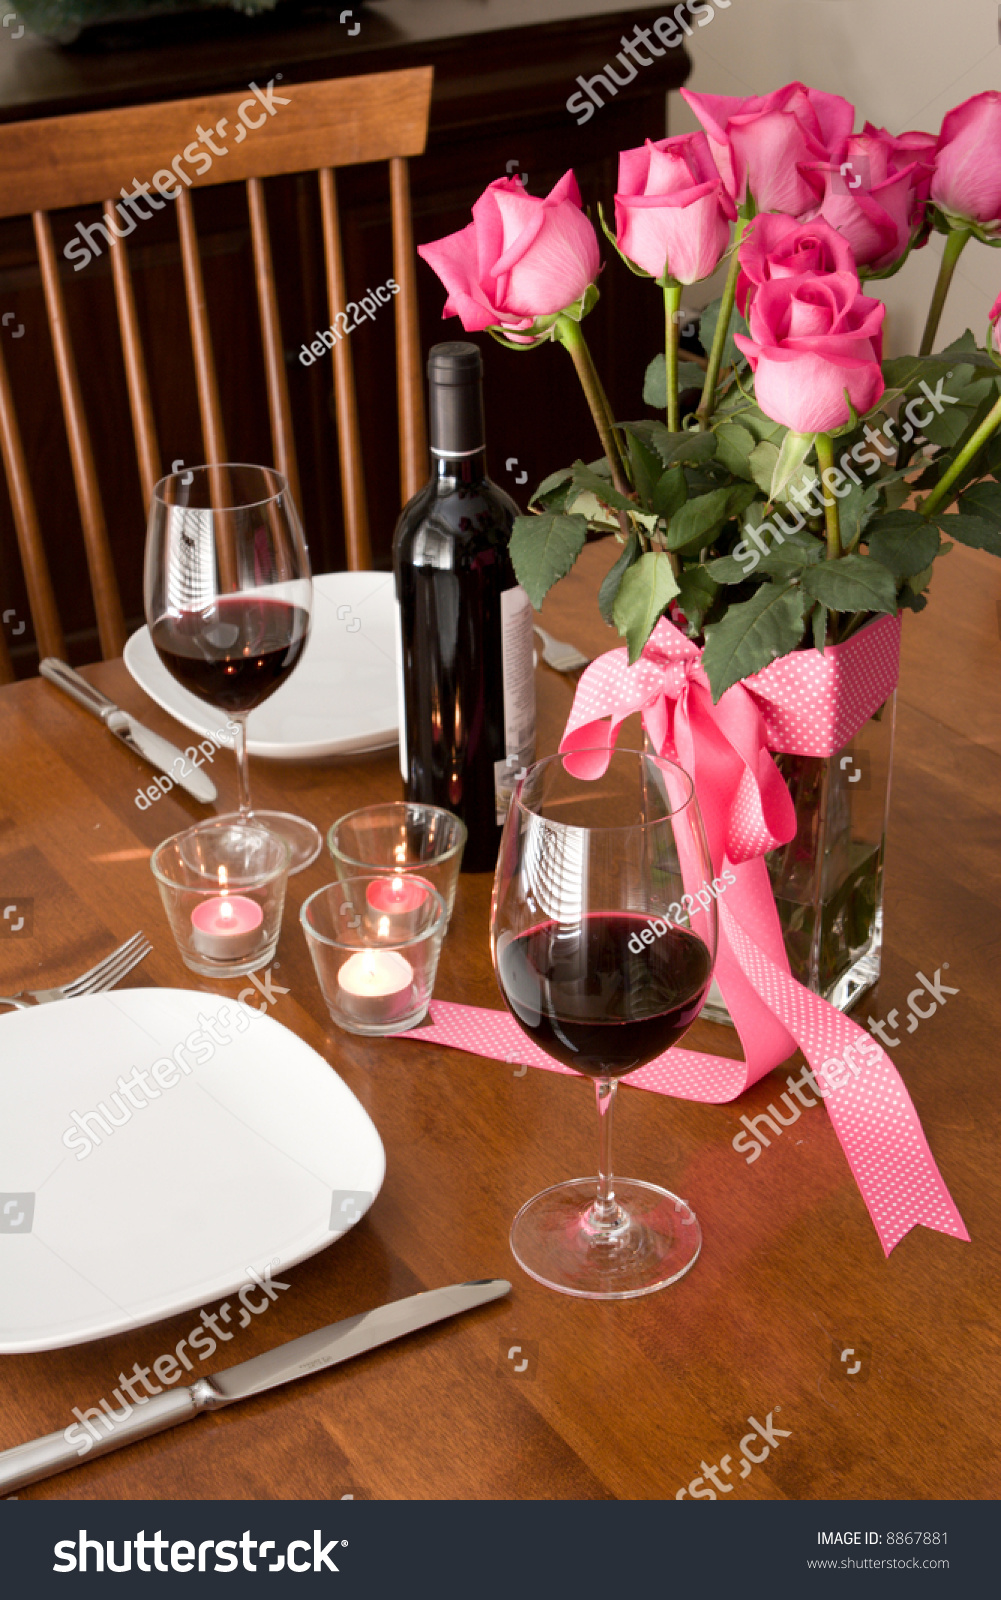 стол в ресторане на двоих с букетом роз